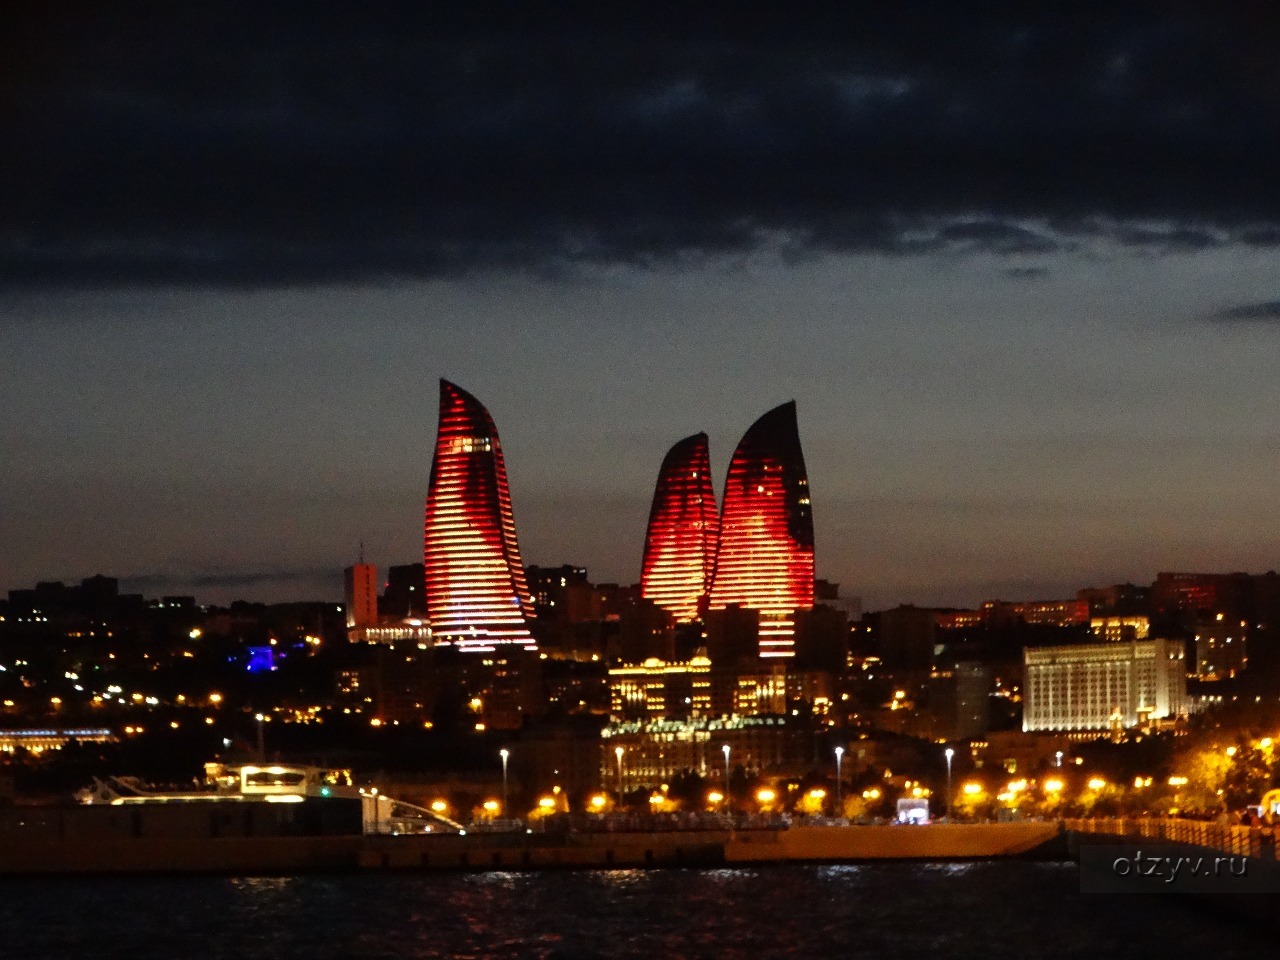 Россия азербайджан баку. Баку башни пламени. Пламенные башни Азербайджан. Огненные башни в Баку. Пламенеющие башни Баку.